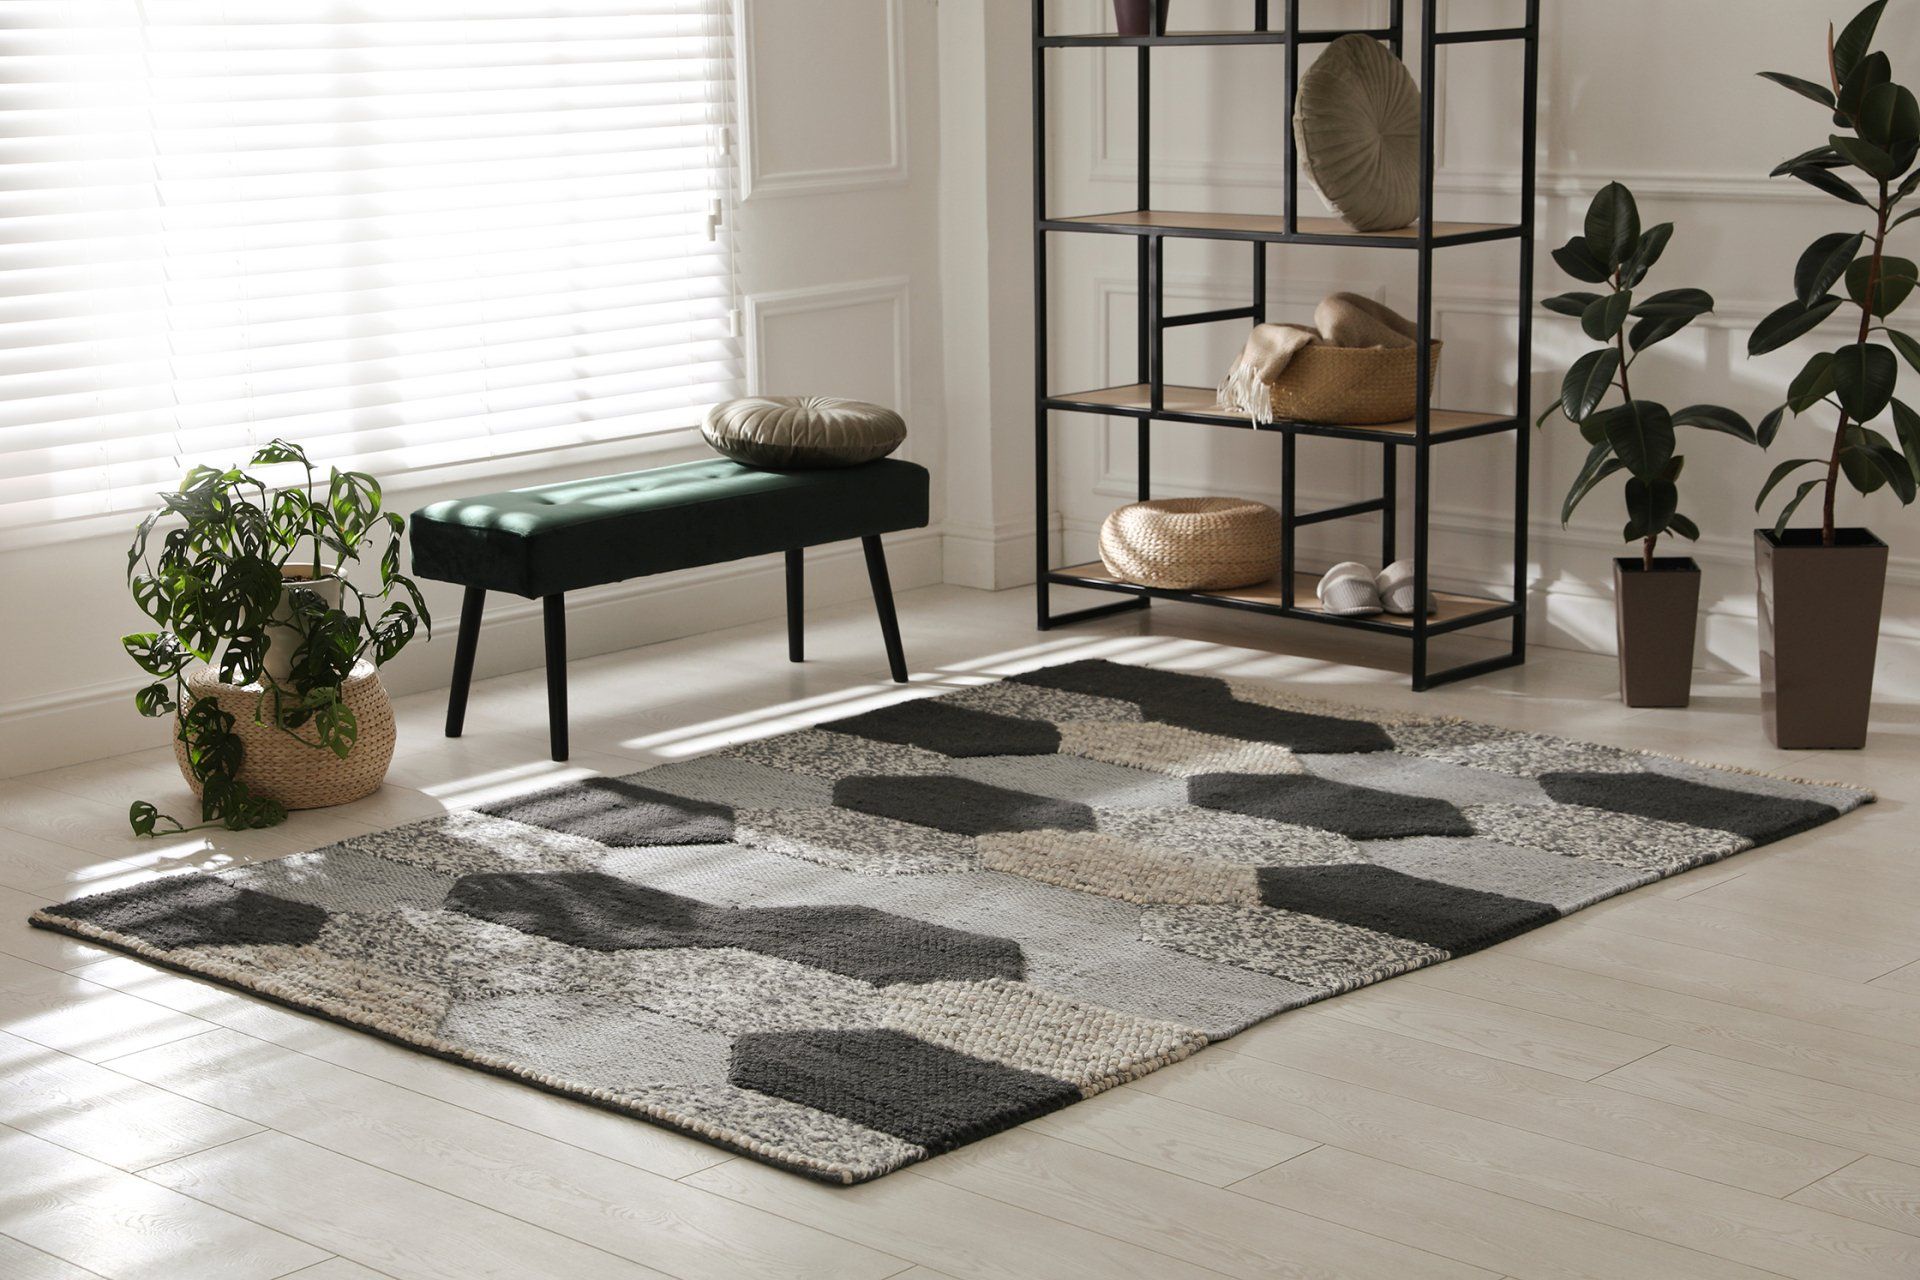 stylish carpet pattern on floor room